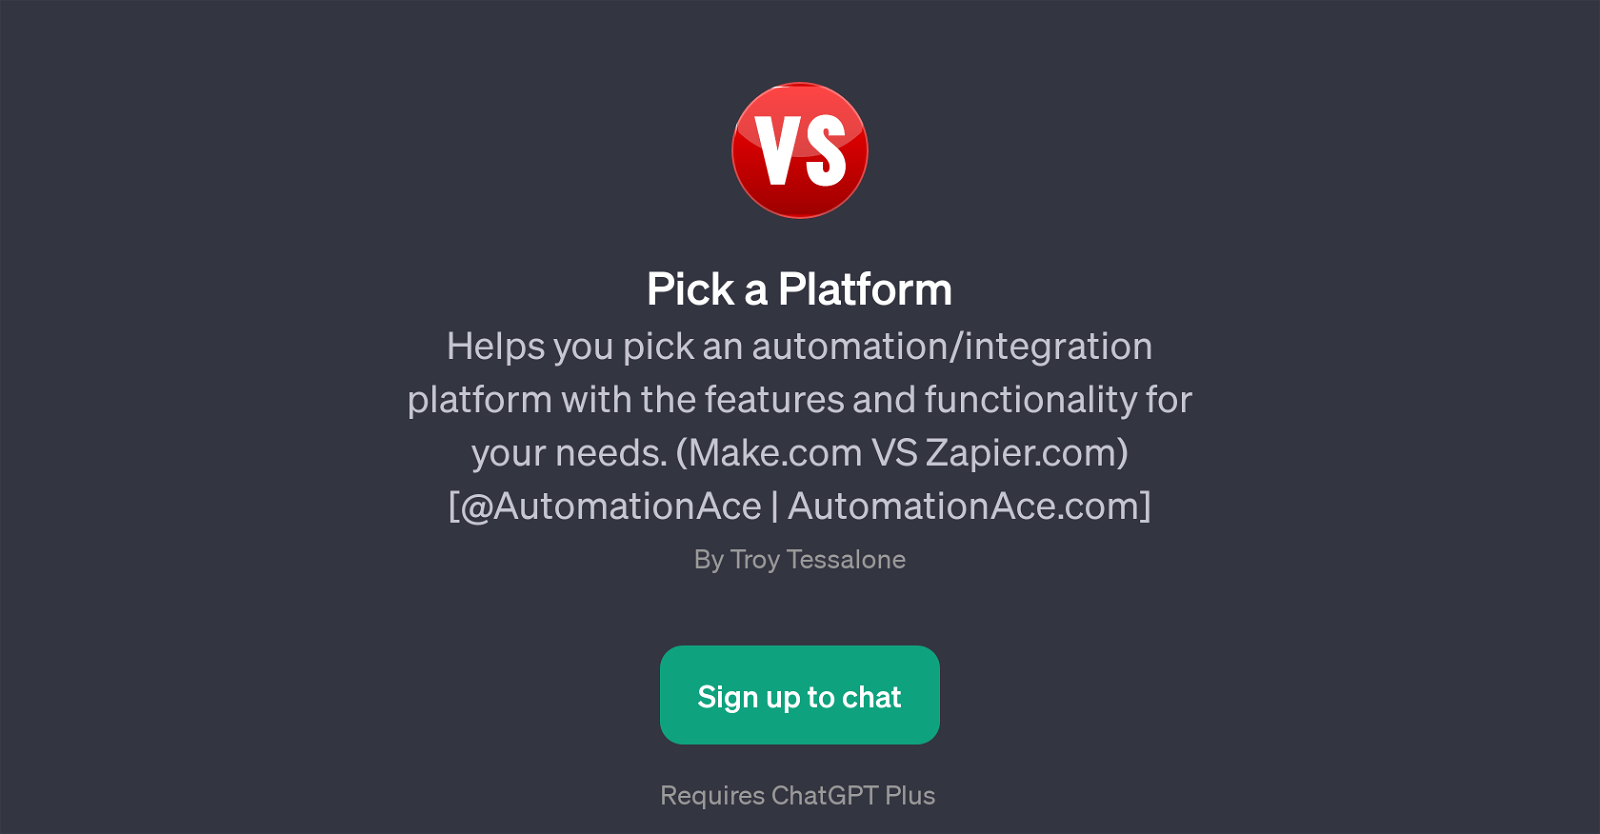 Pick a Platform website